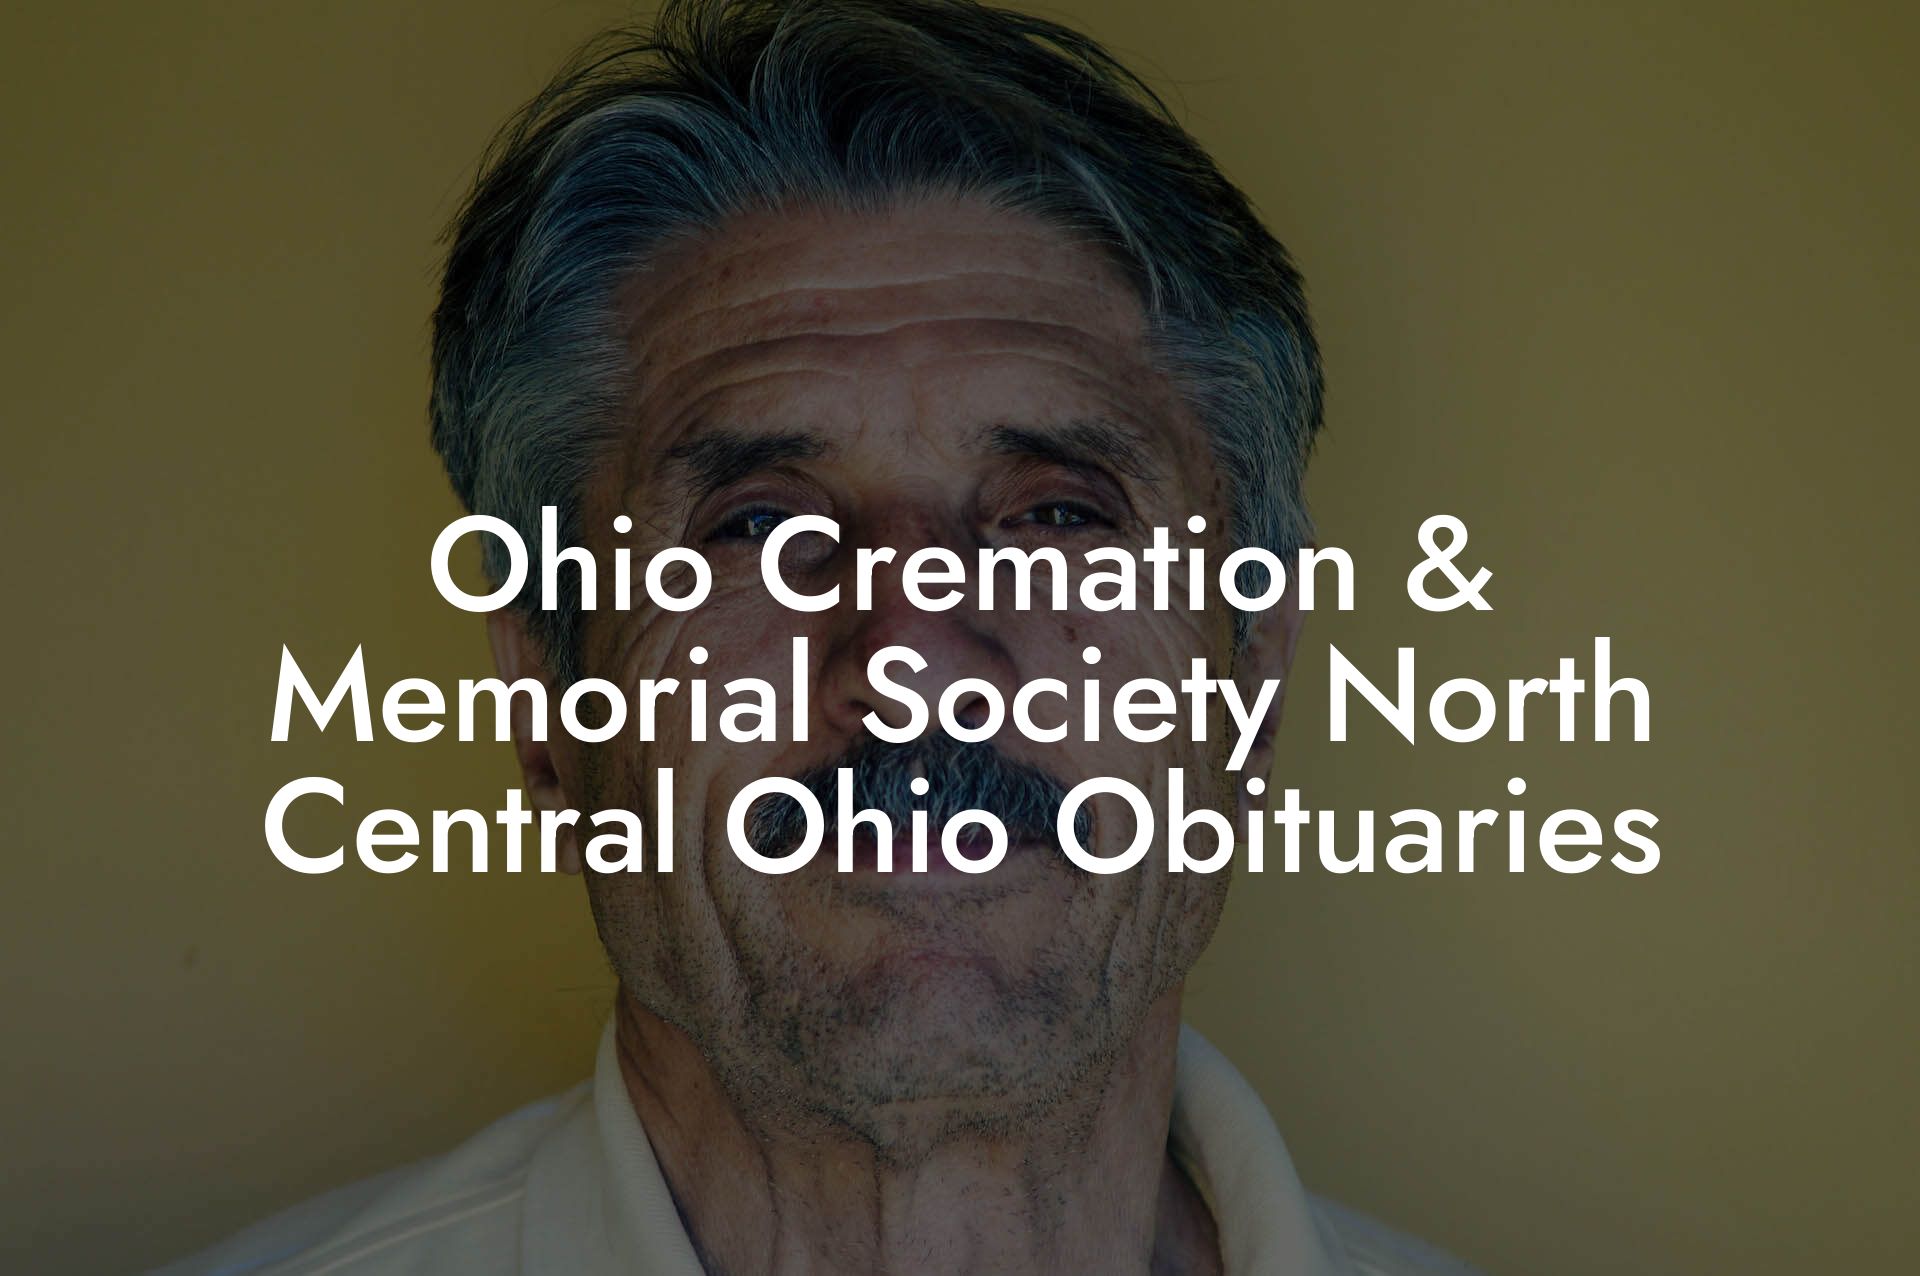 Ohio Cremation & Memorial Society North Central Ohio Obituaries